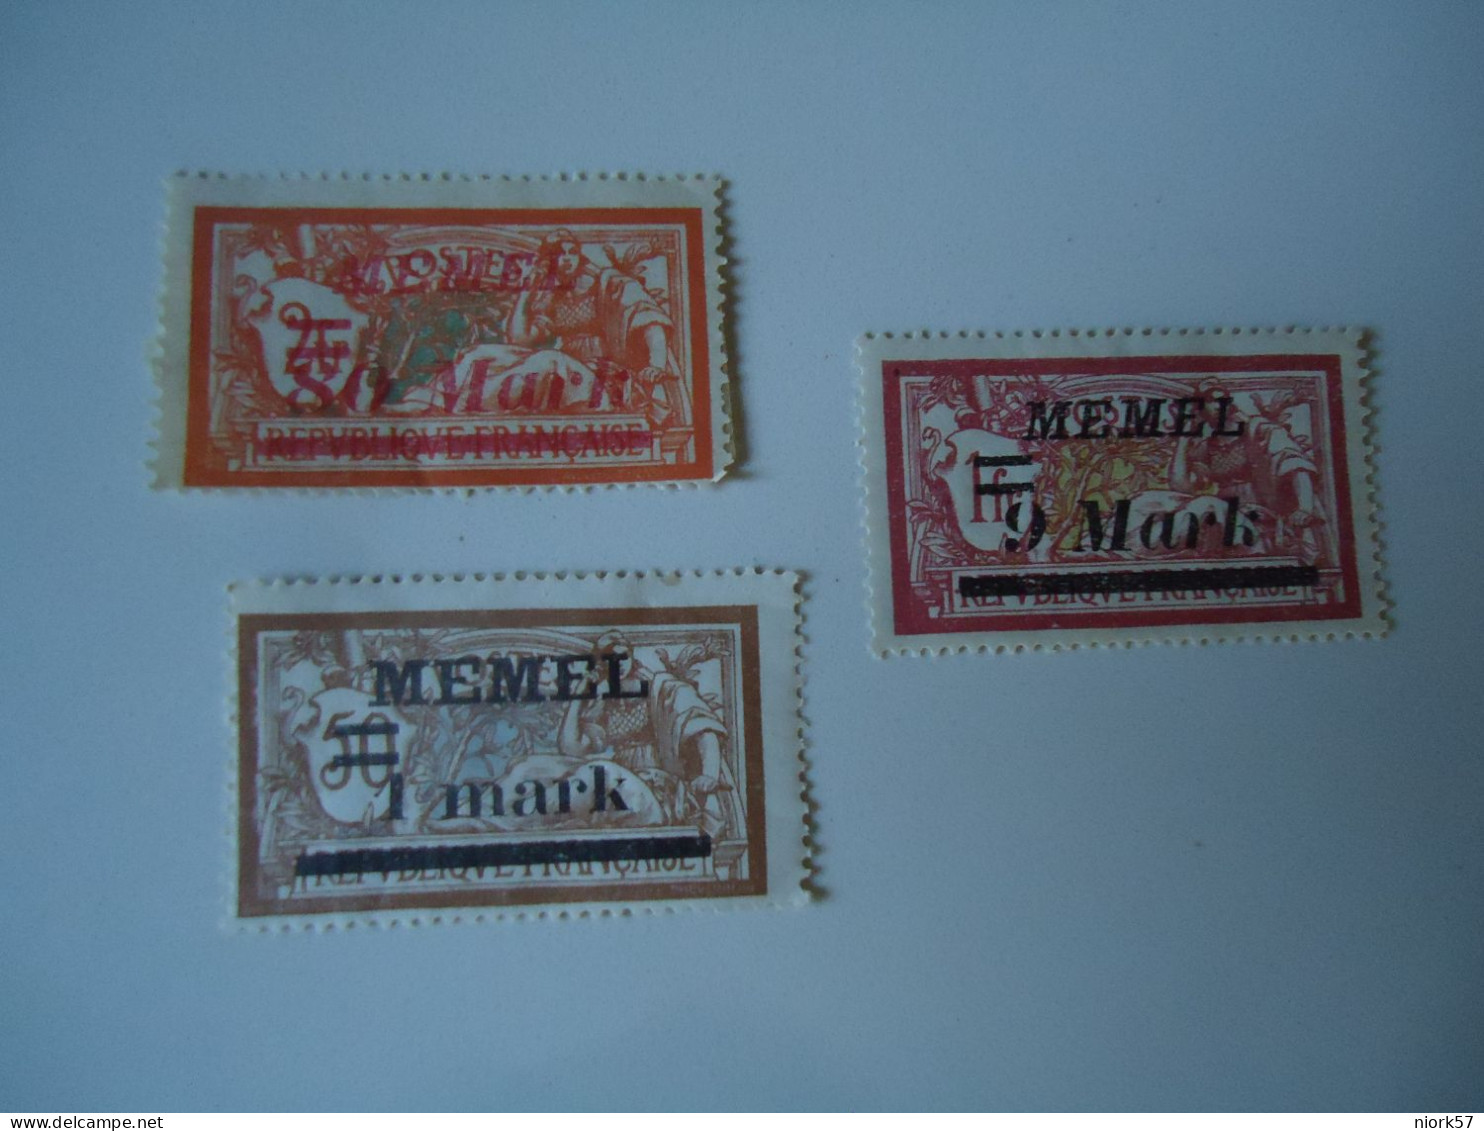 MEMEL FRANCE MLN STAMPS  3 OVEPRINT - Used Stamps